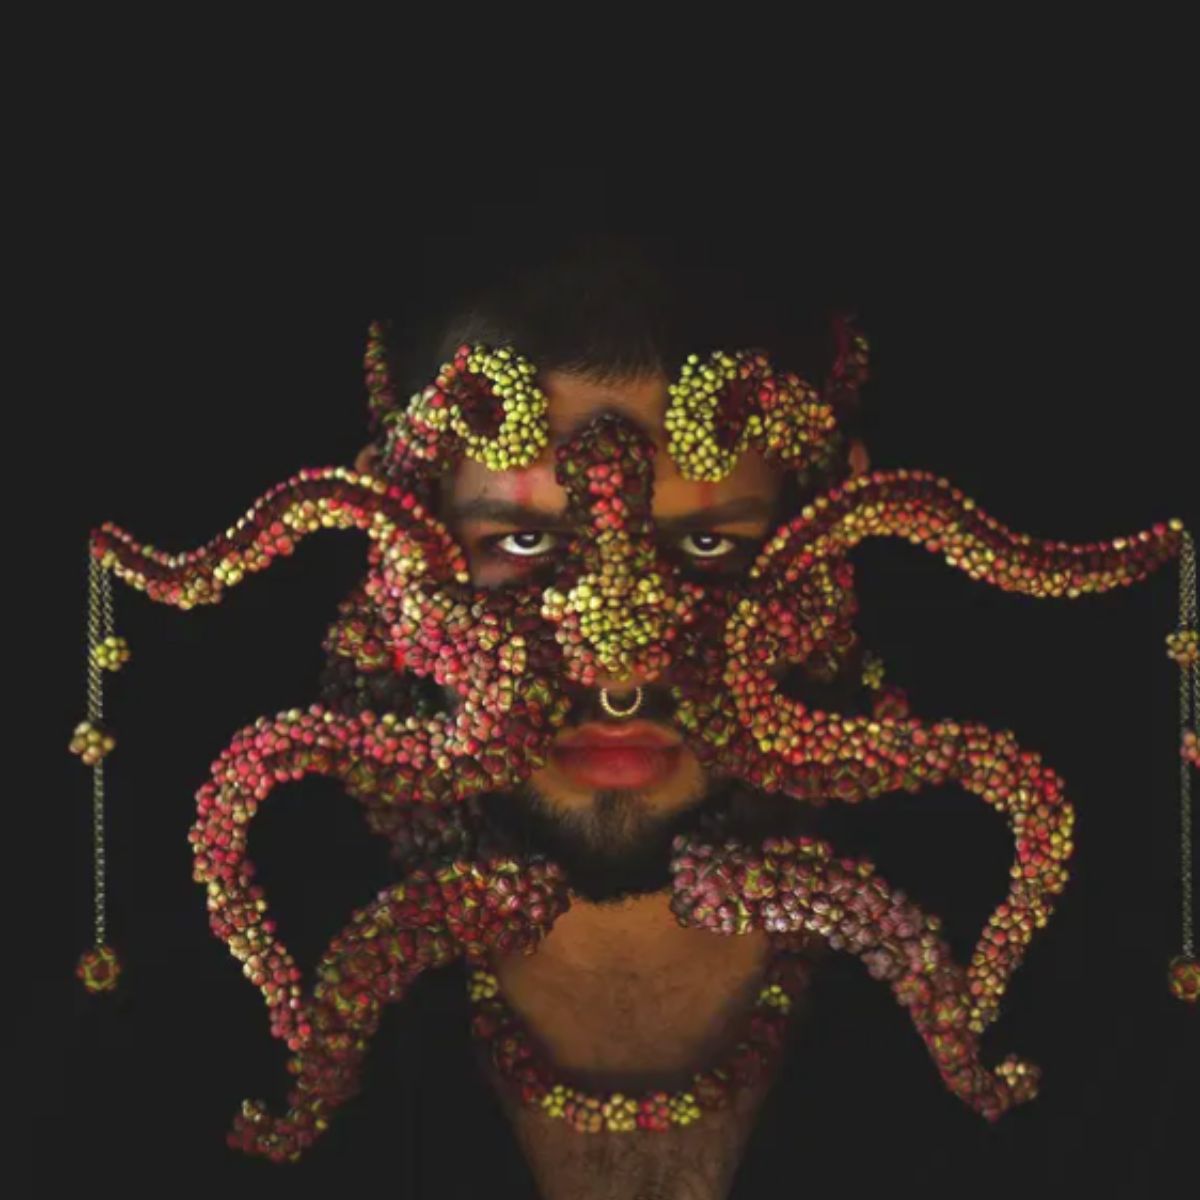 Octopus Waikapu mask- on Thursd 